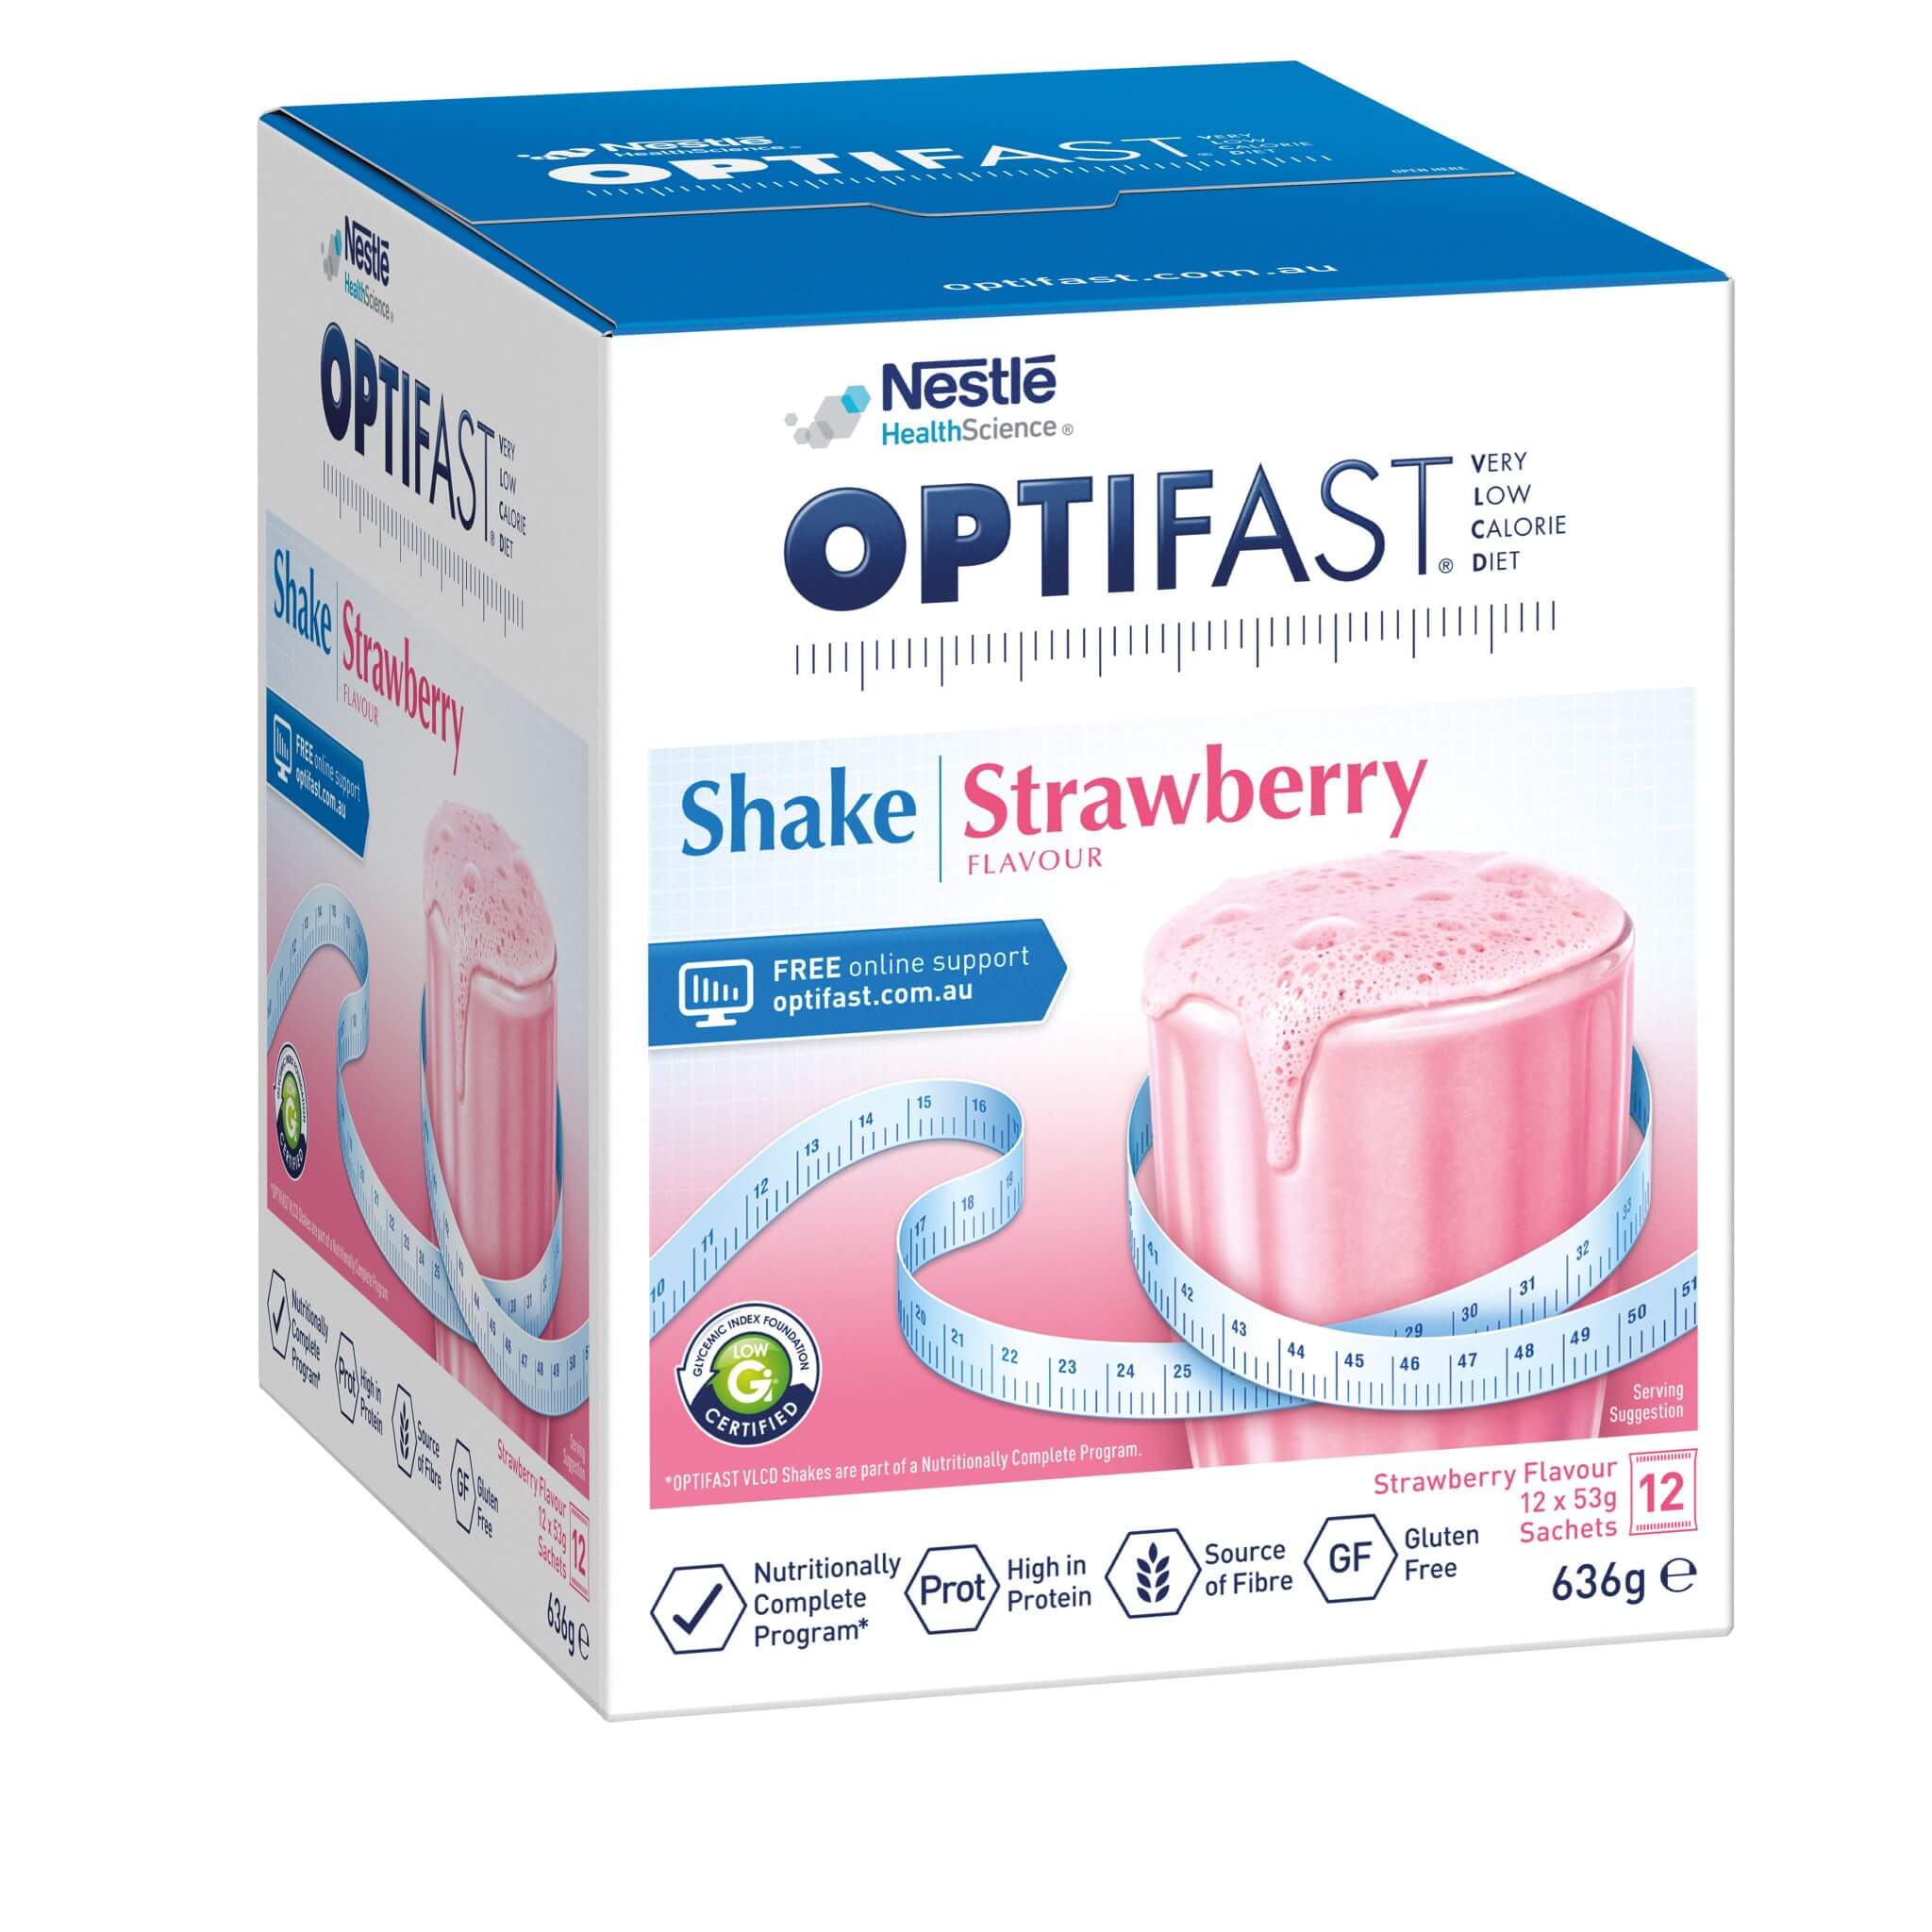 OPTIFAST VLCD Shake Strawberry Flavour 12x53g